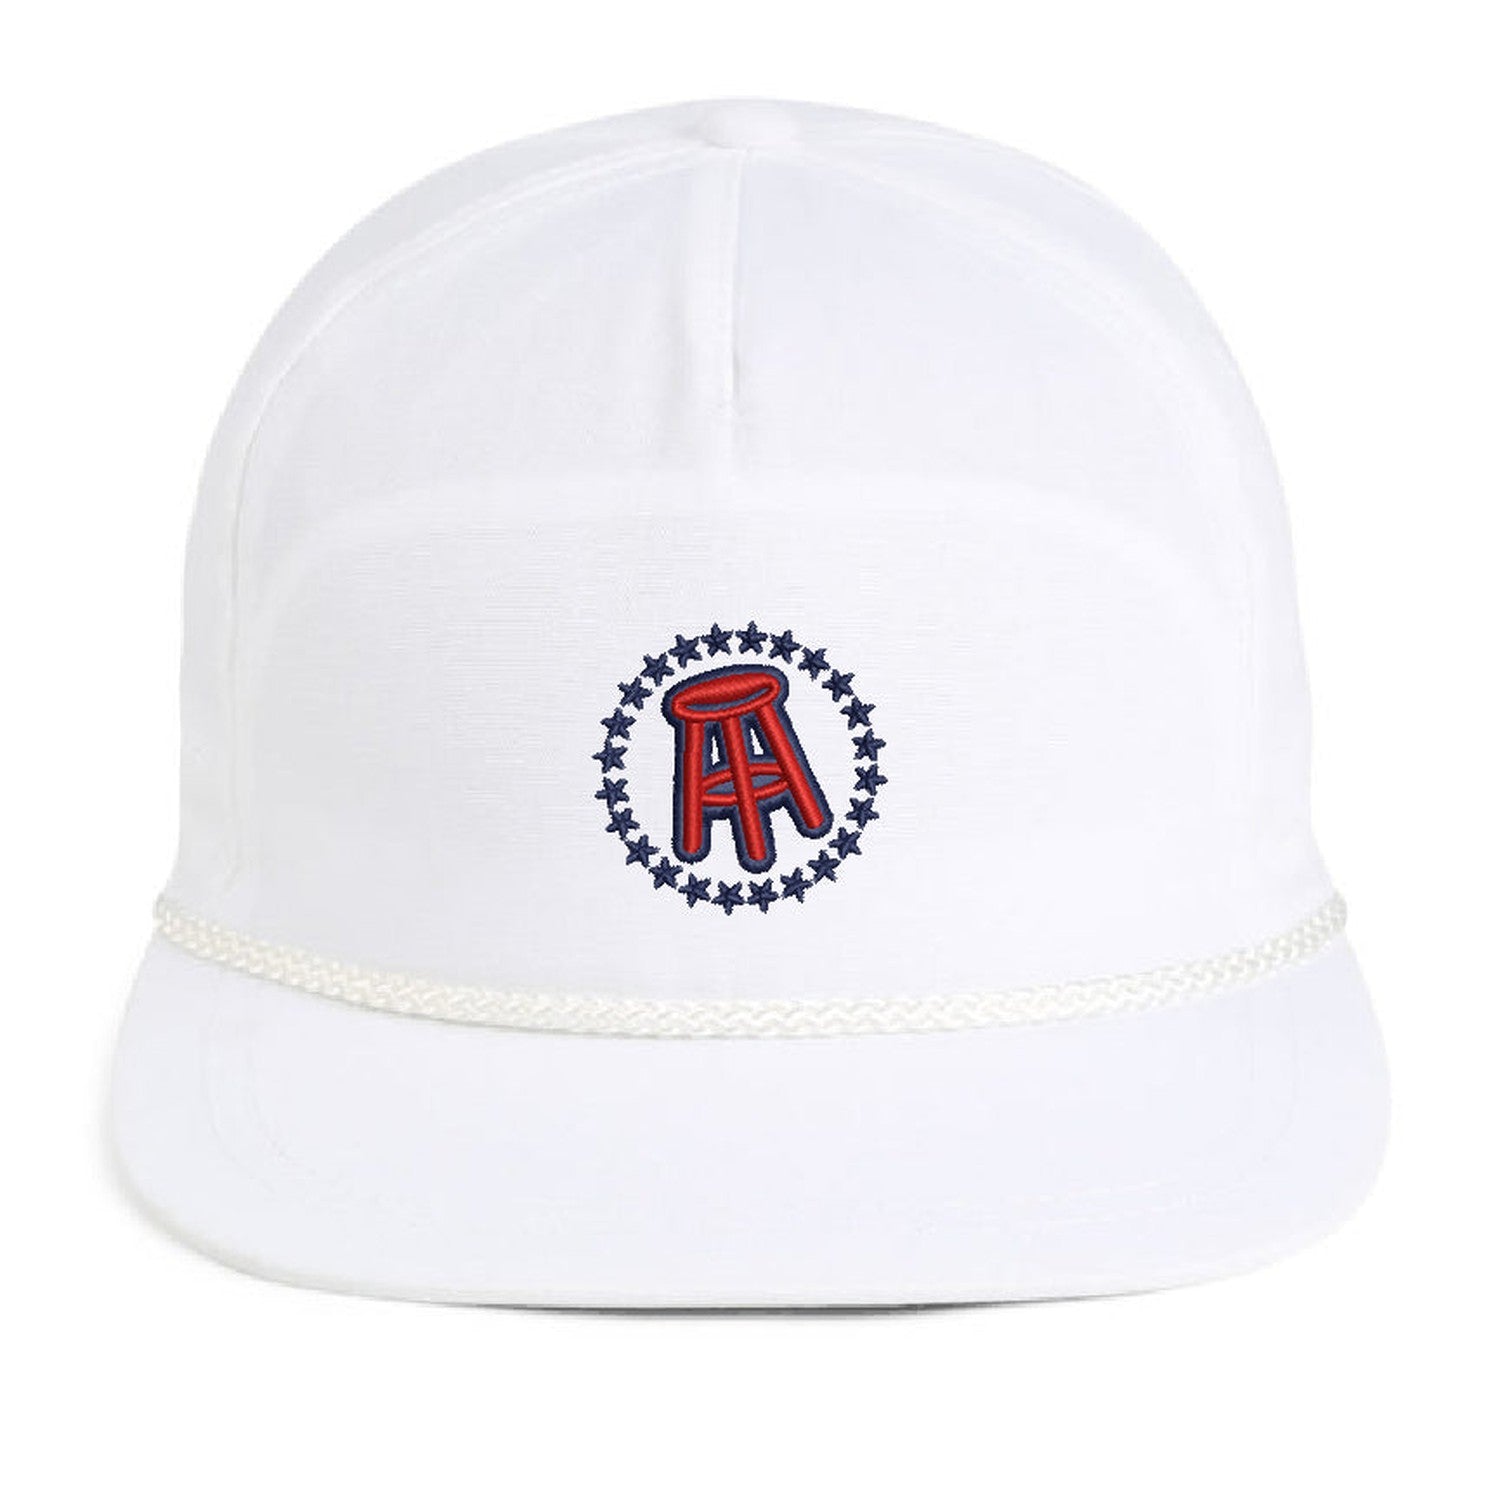 Barstool Imperial Rope Hat-Hats-Barstool Sports-Barstool Sports